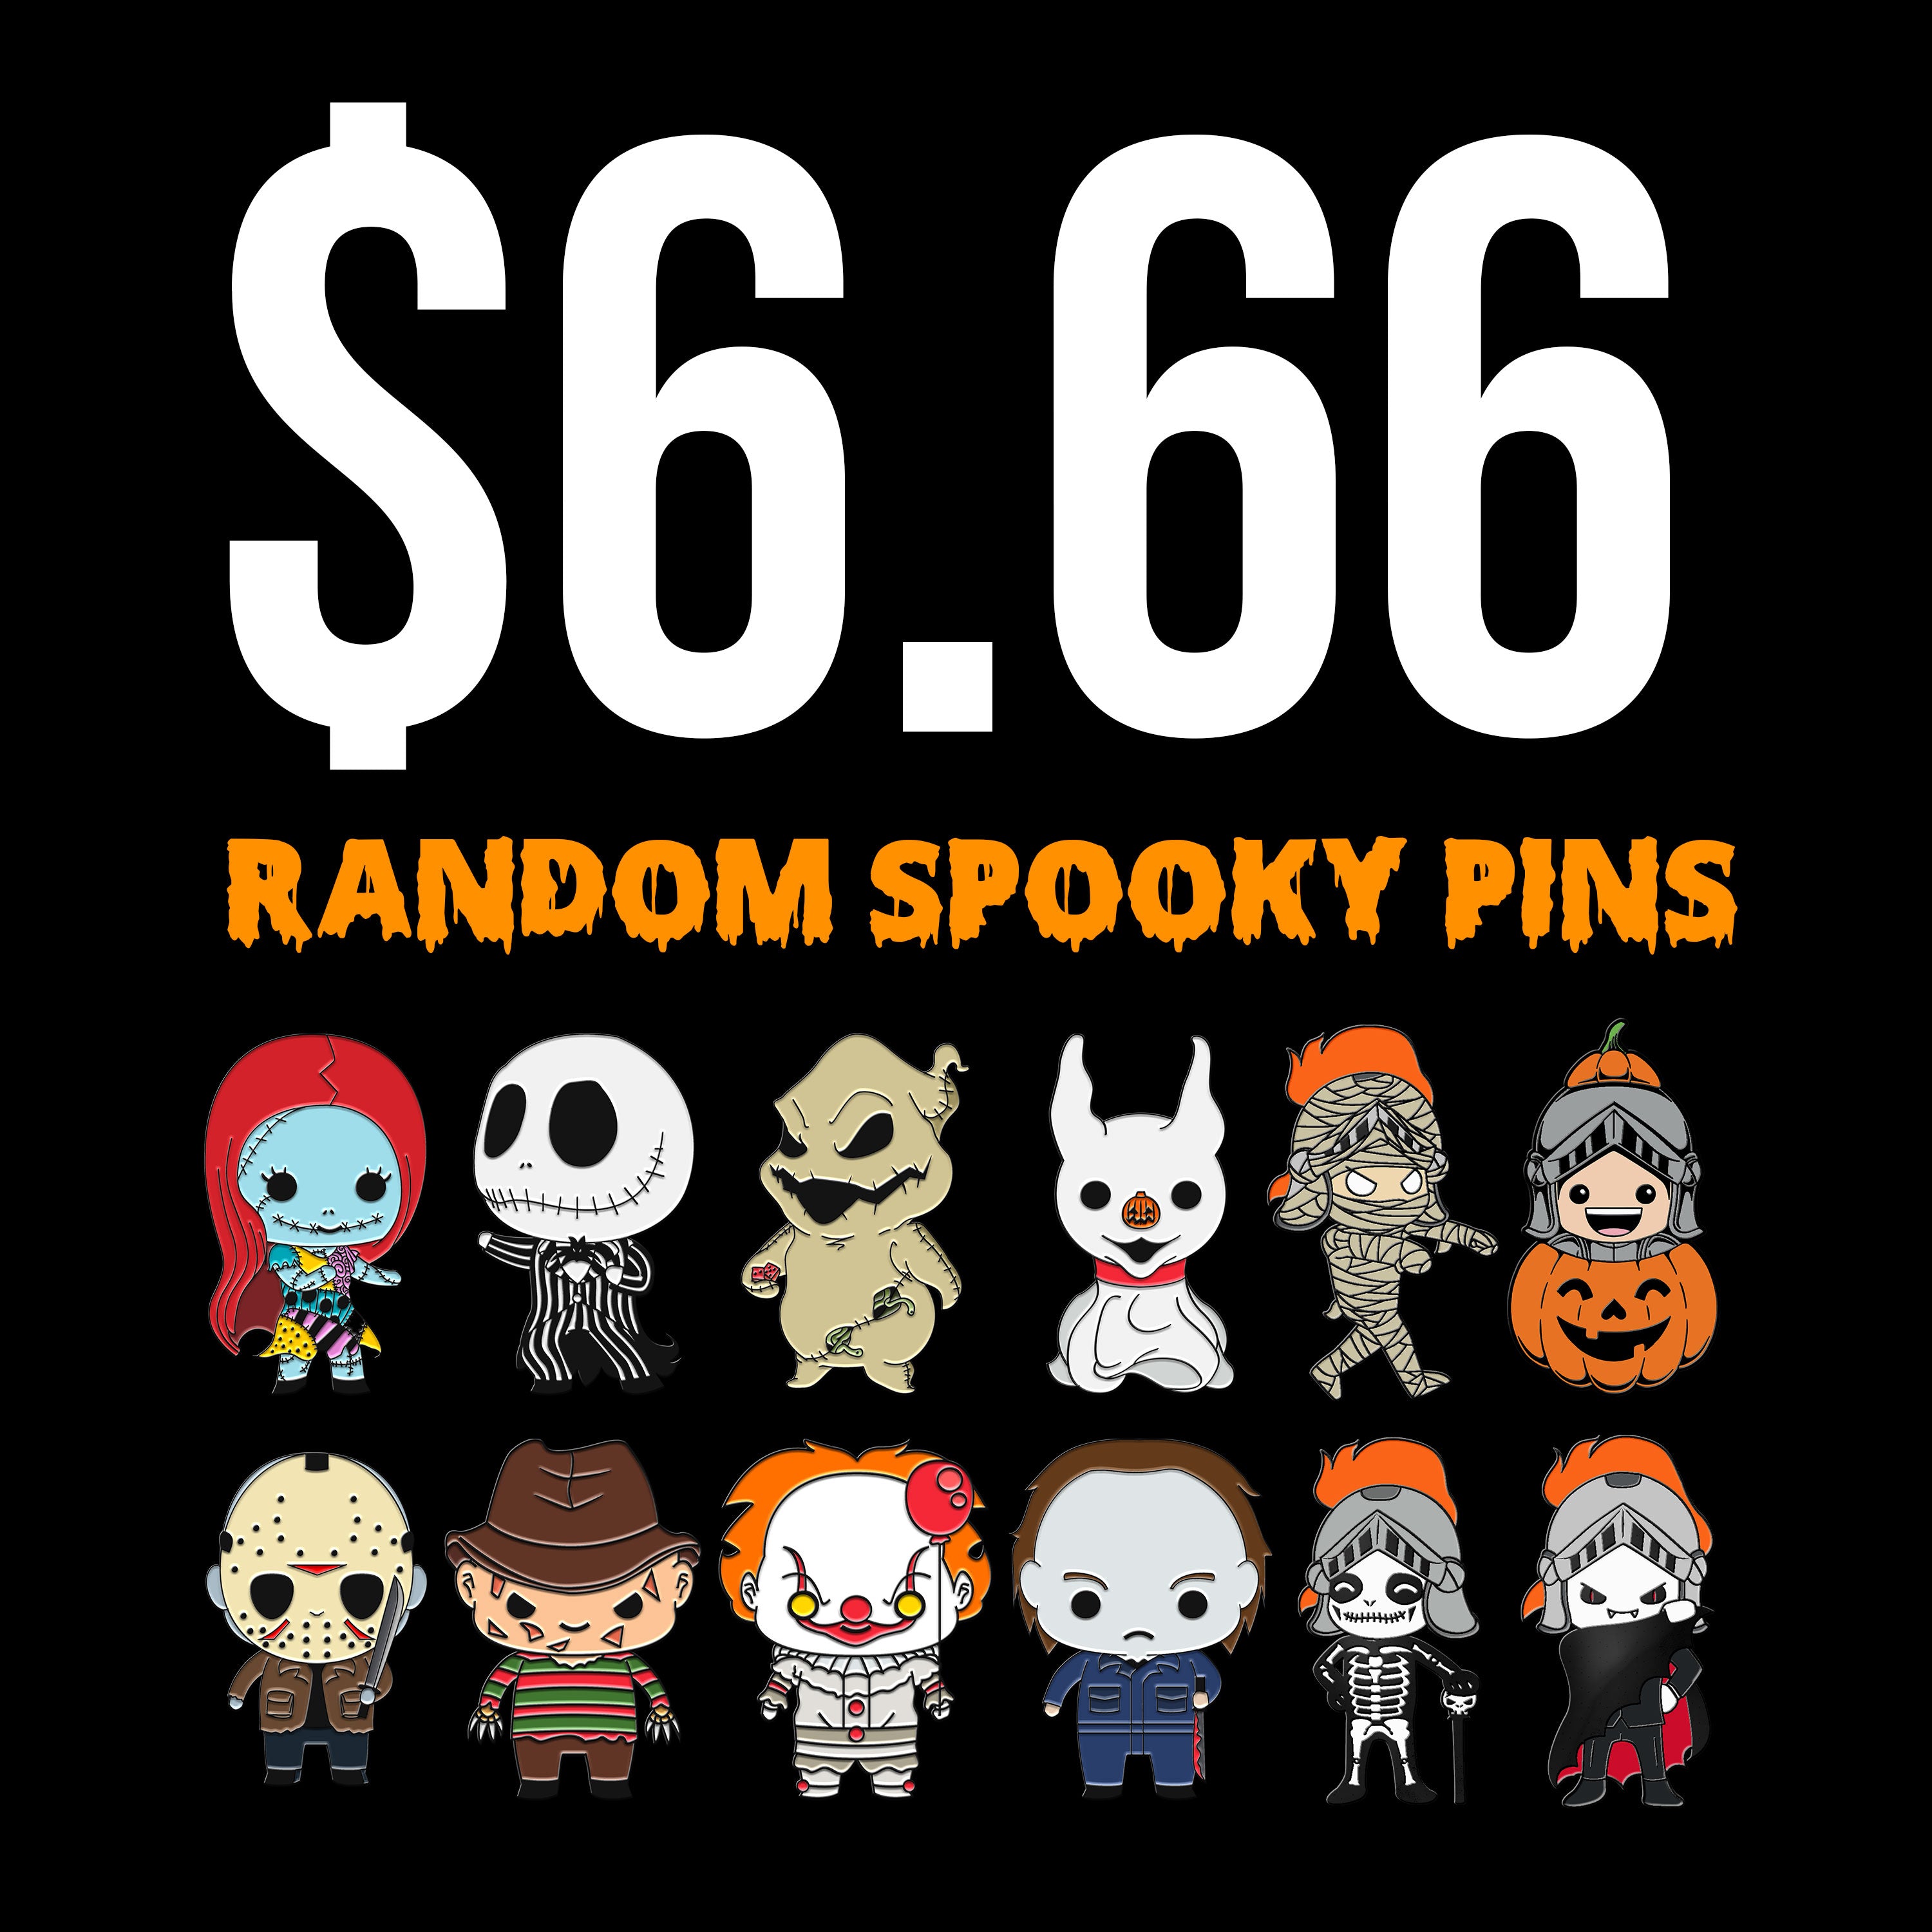 $6.66 Spooky Pins